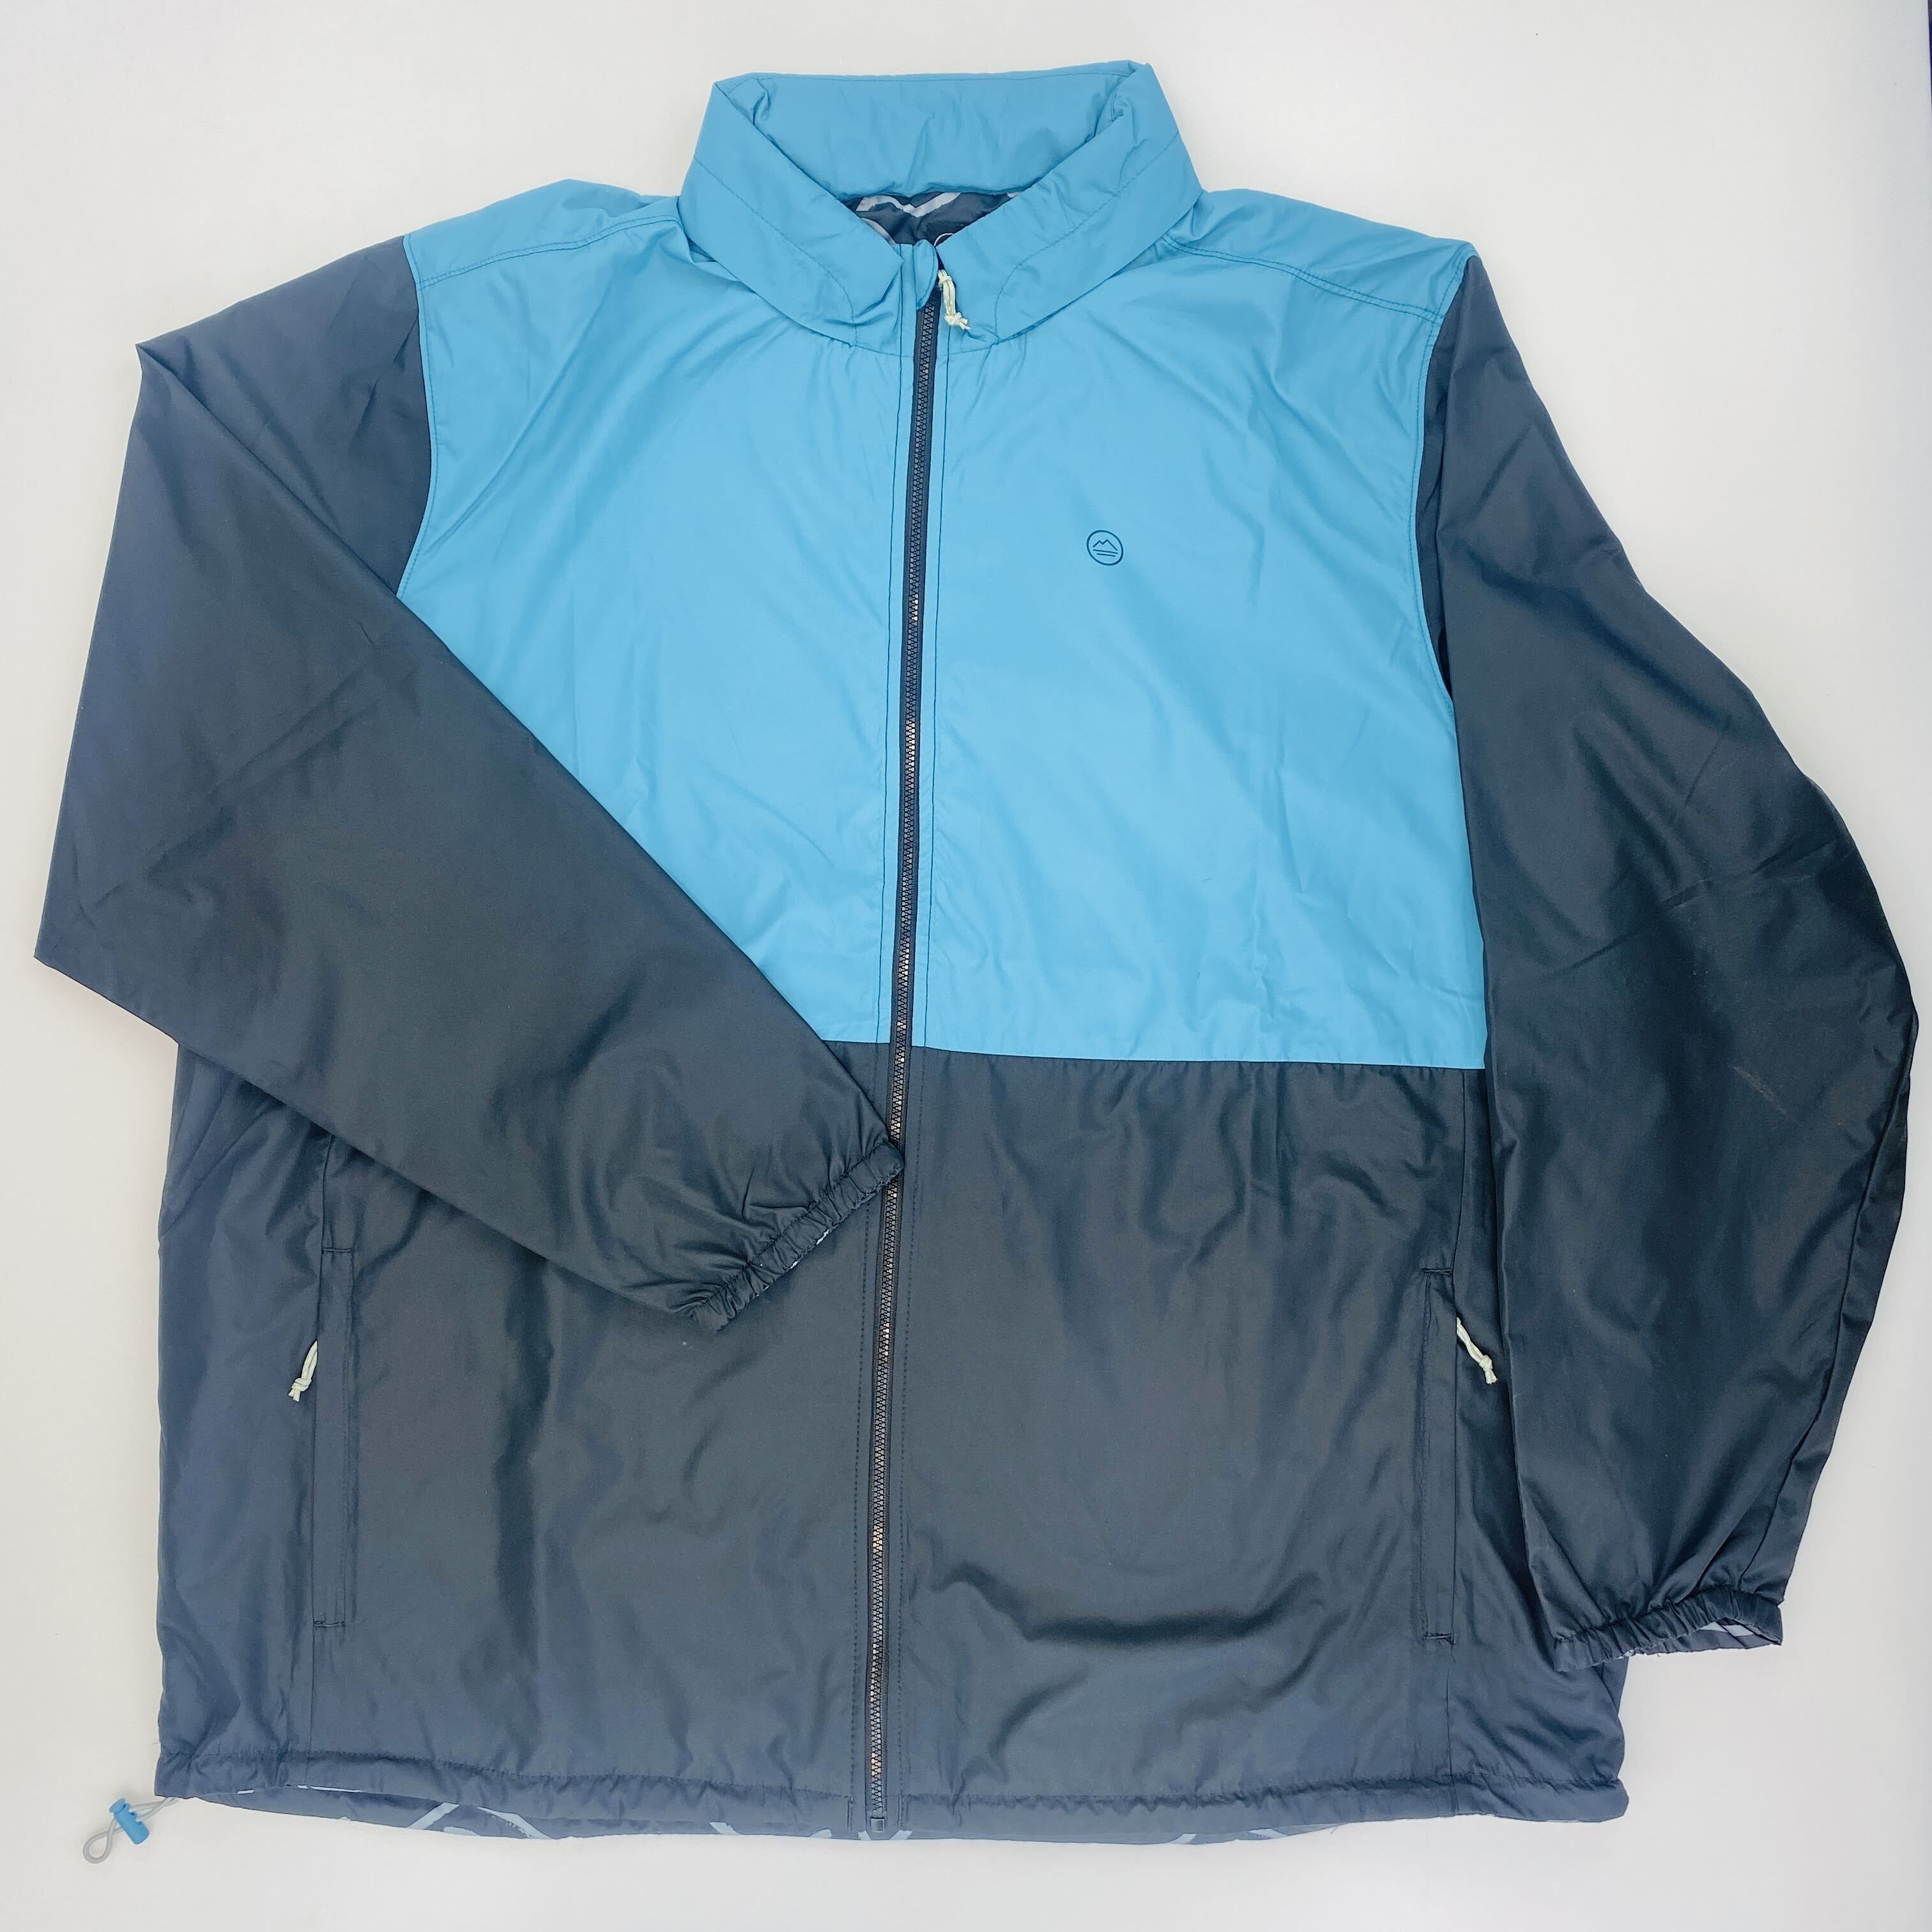 Wrangler Lwt Packable Jacket - Seconde main Veste coupe-vent homme - Bleu - XL | Hardloop